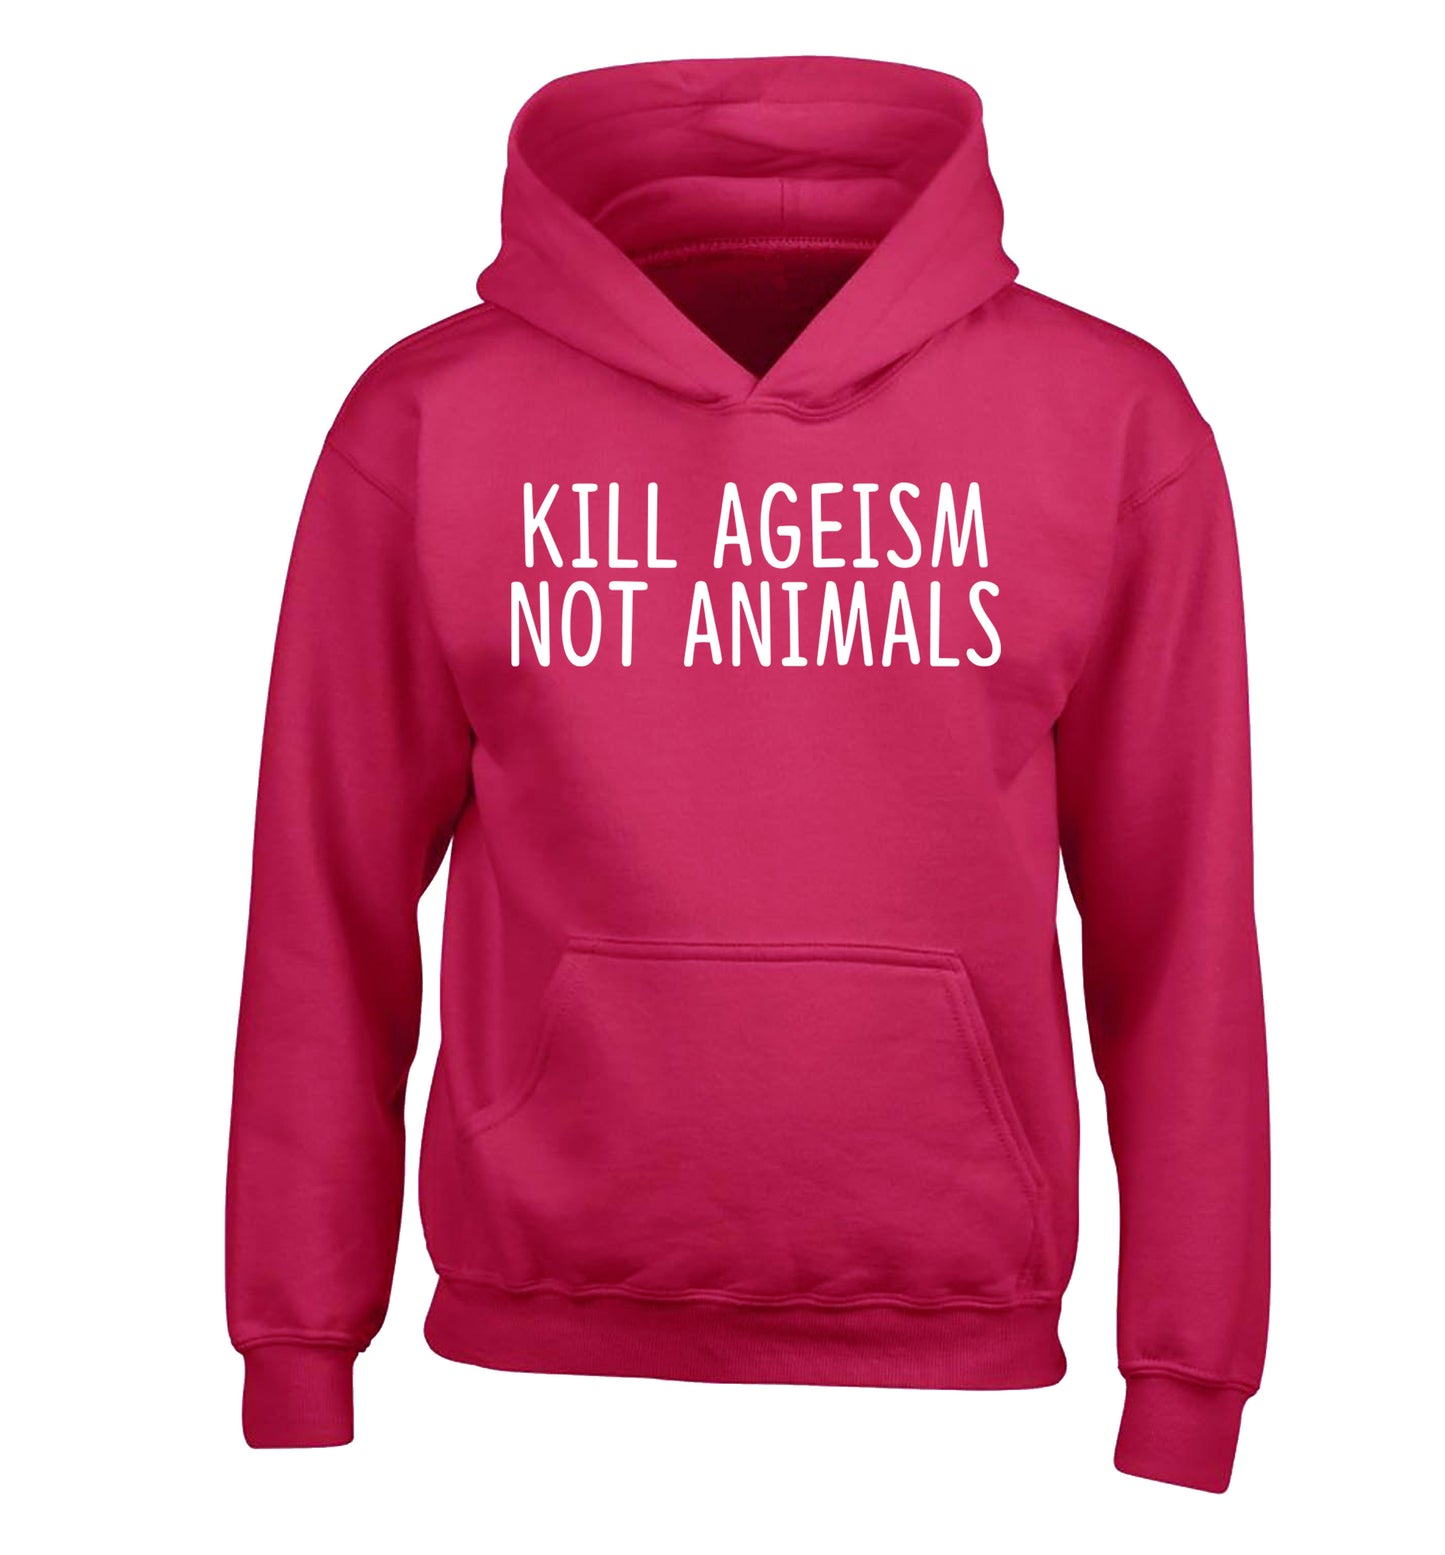 Kill Ageism Not Animals children's pink hoodie 12-13 Years